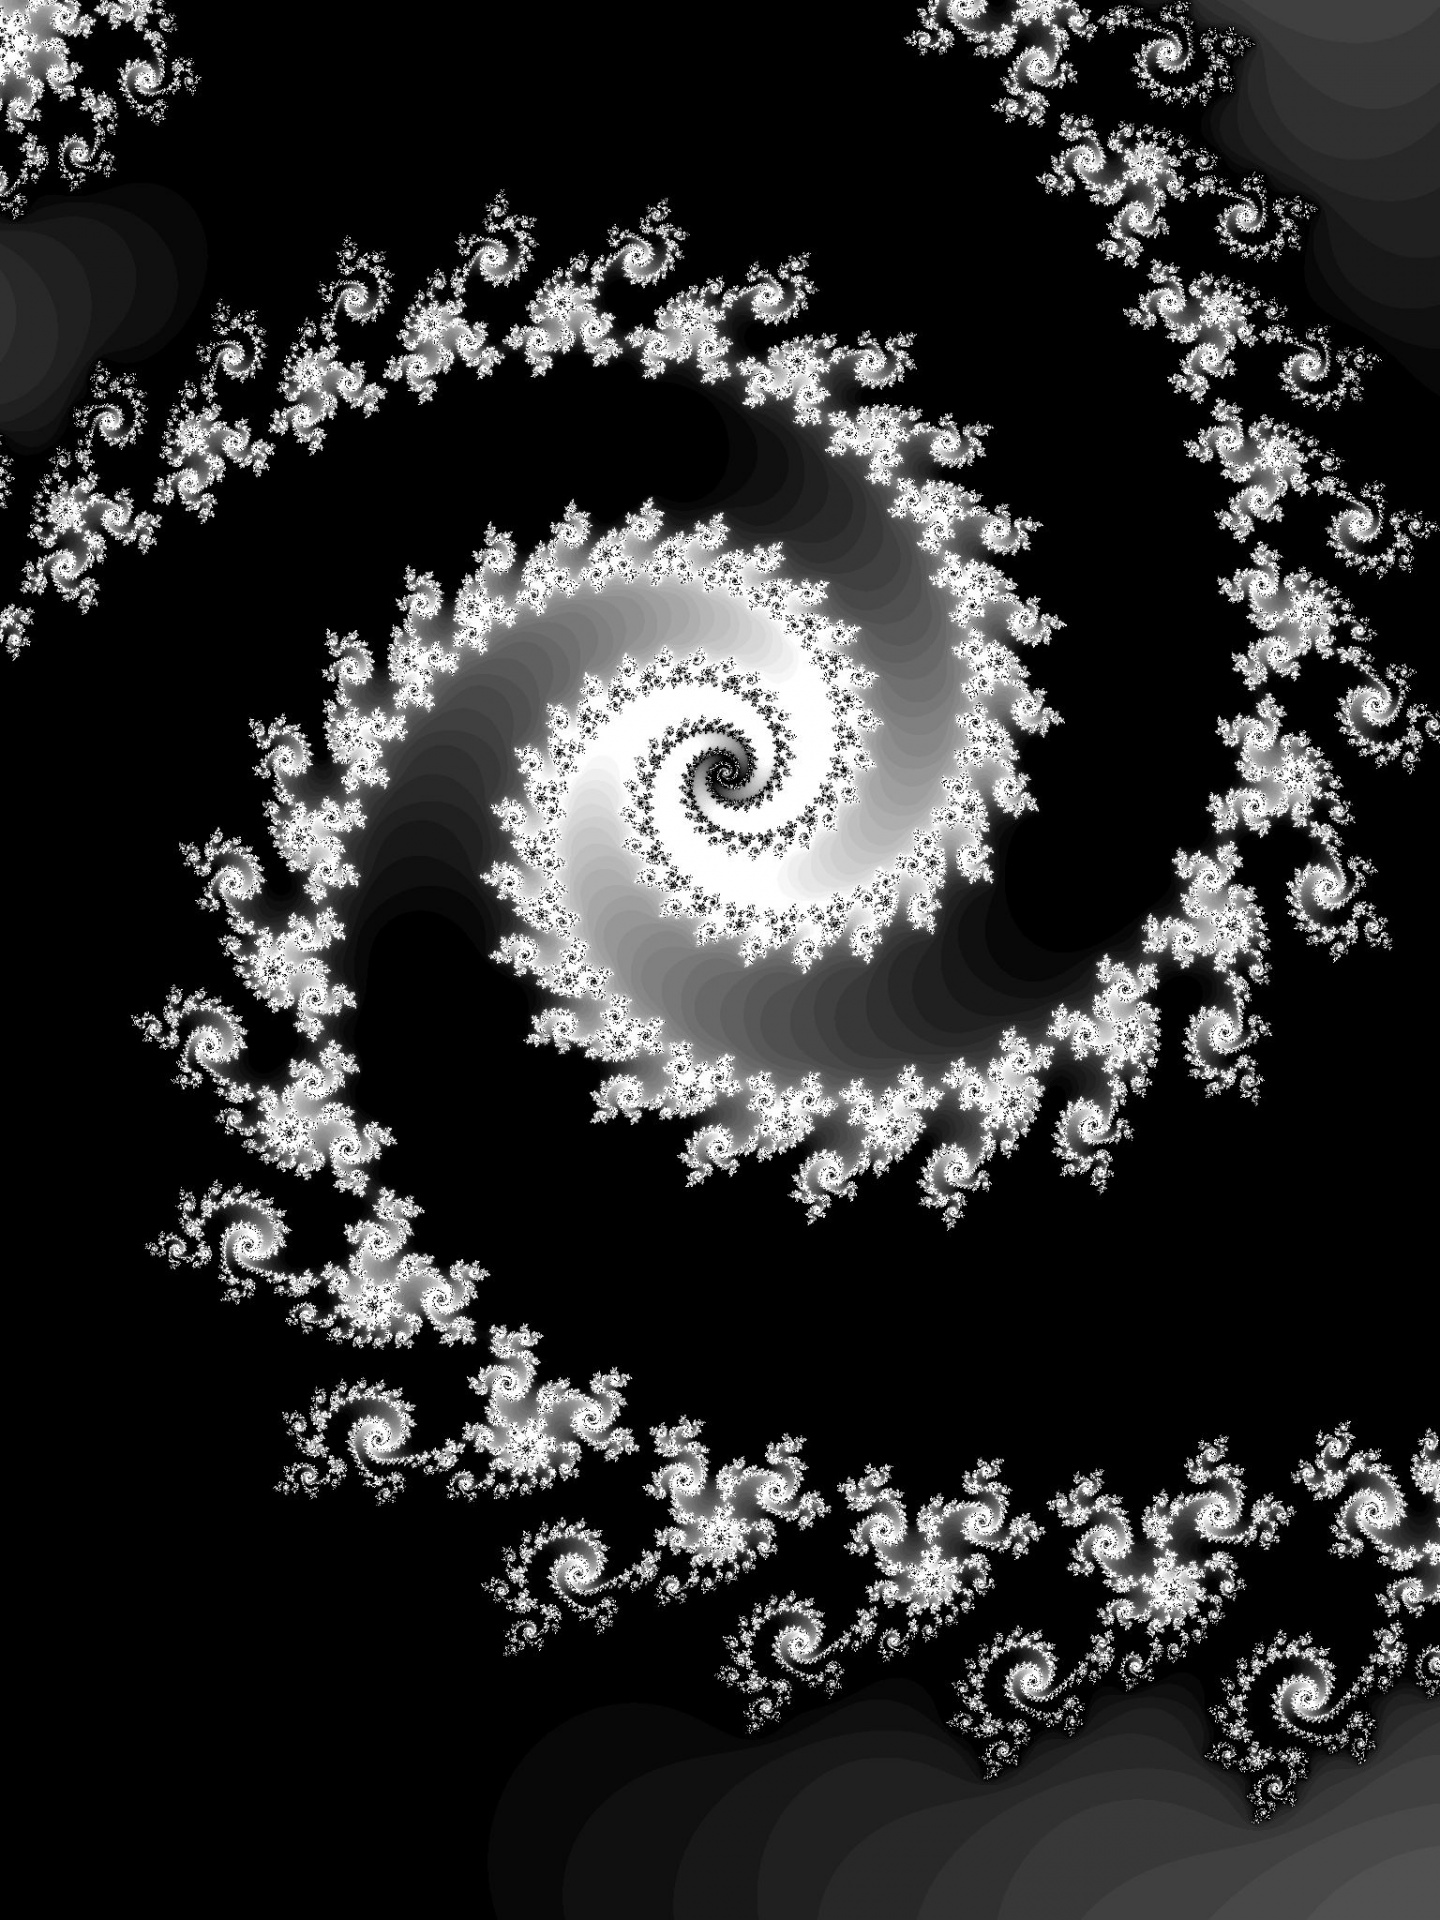 Computer graphics - fractal spiral